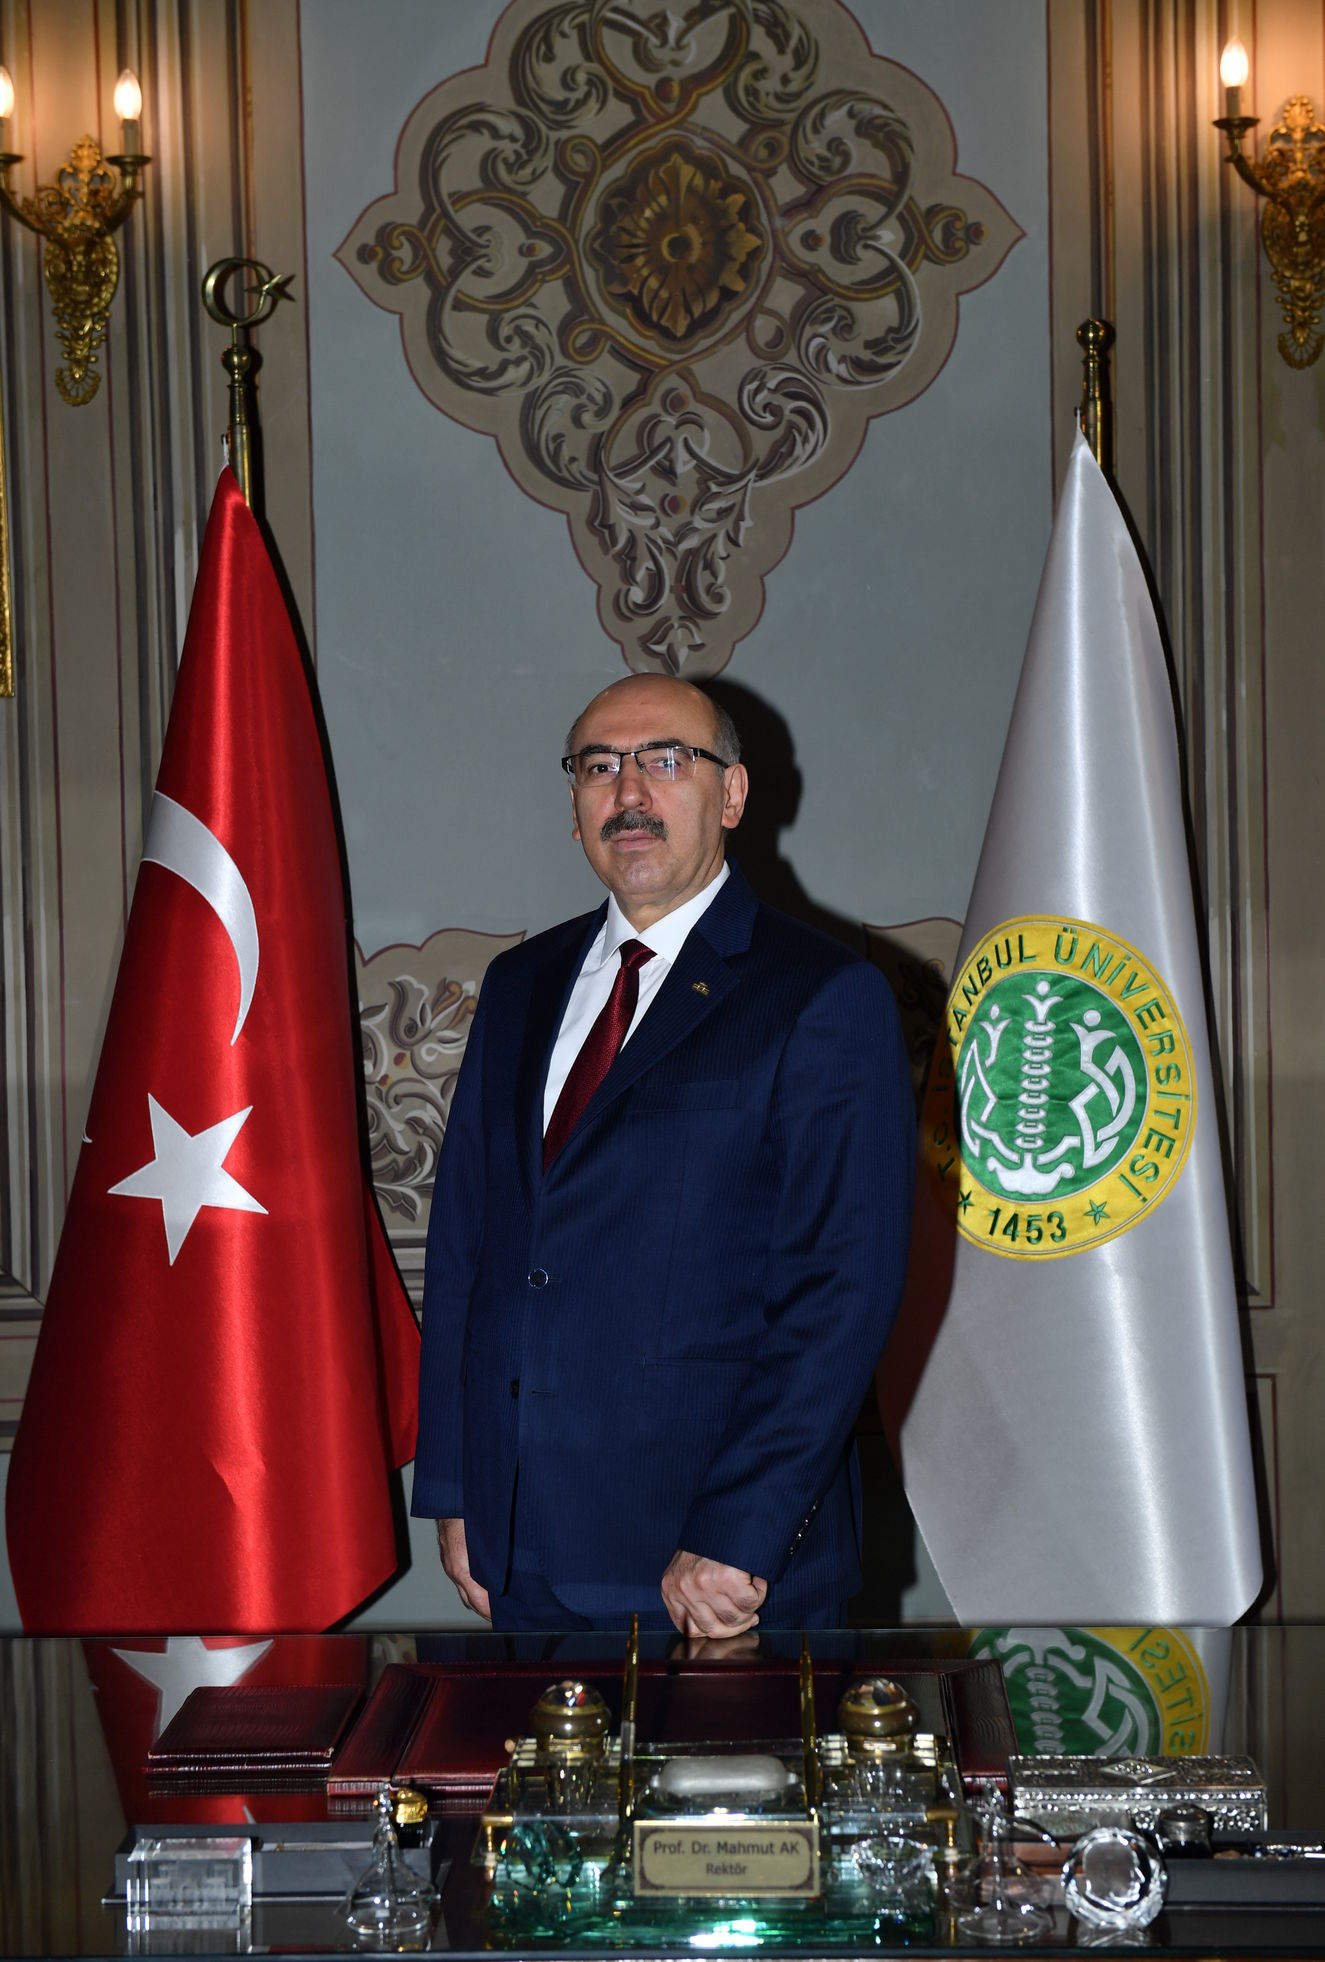 İstanbul Üniversitesi Rektörü Prof. Dr. Mahmut Ak